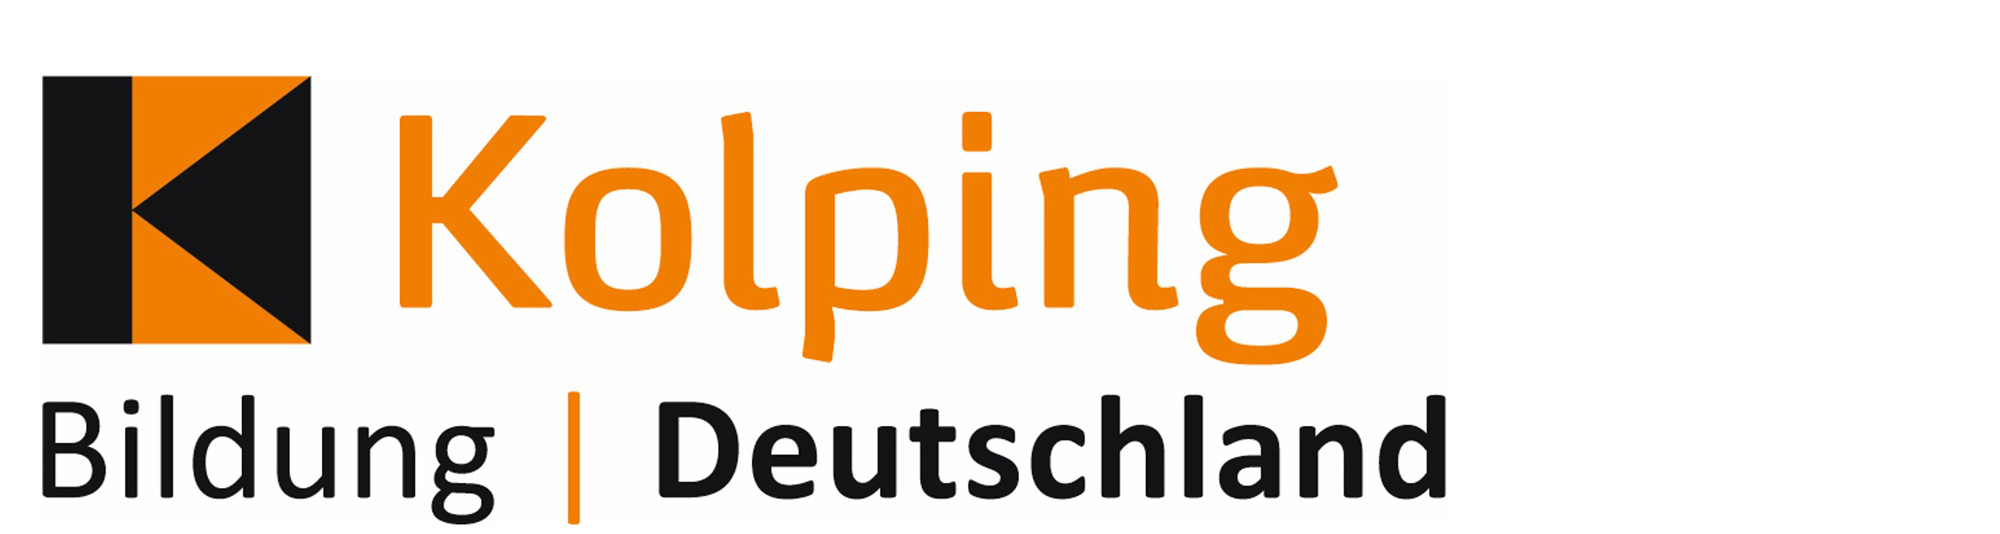 Kolping Bildung Deutschland gGmbH - Pflegeschule Troisdorf